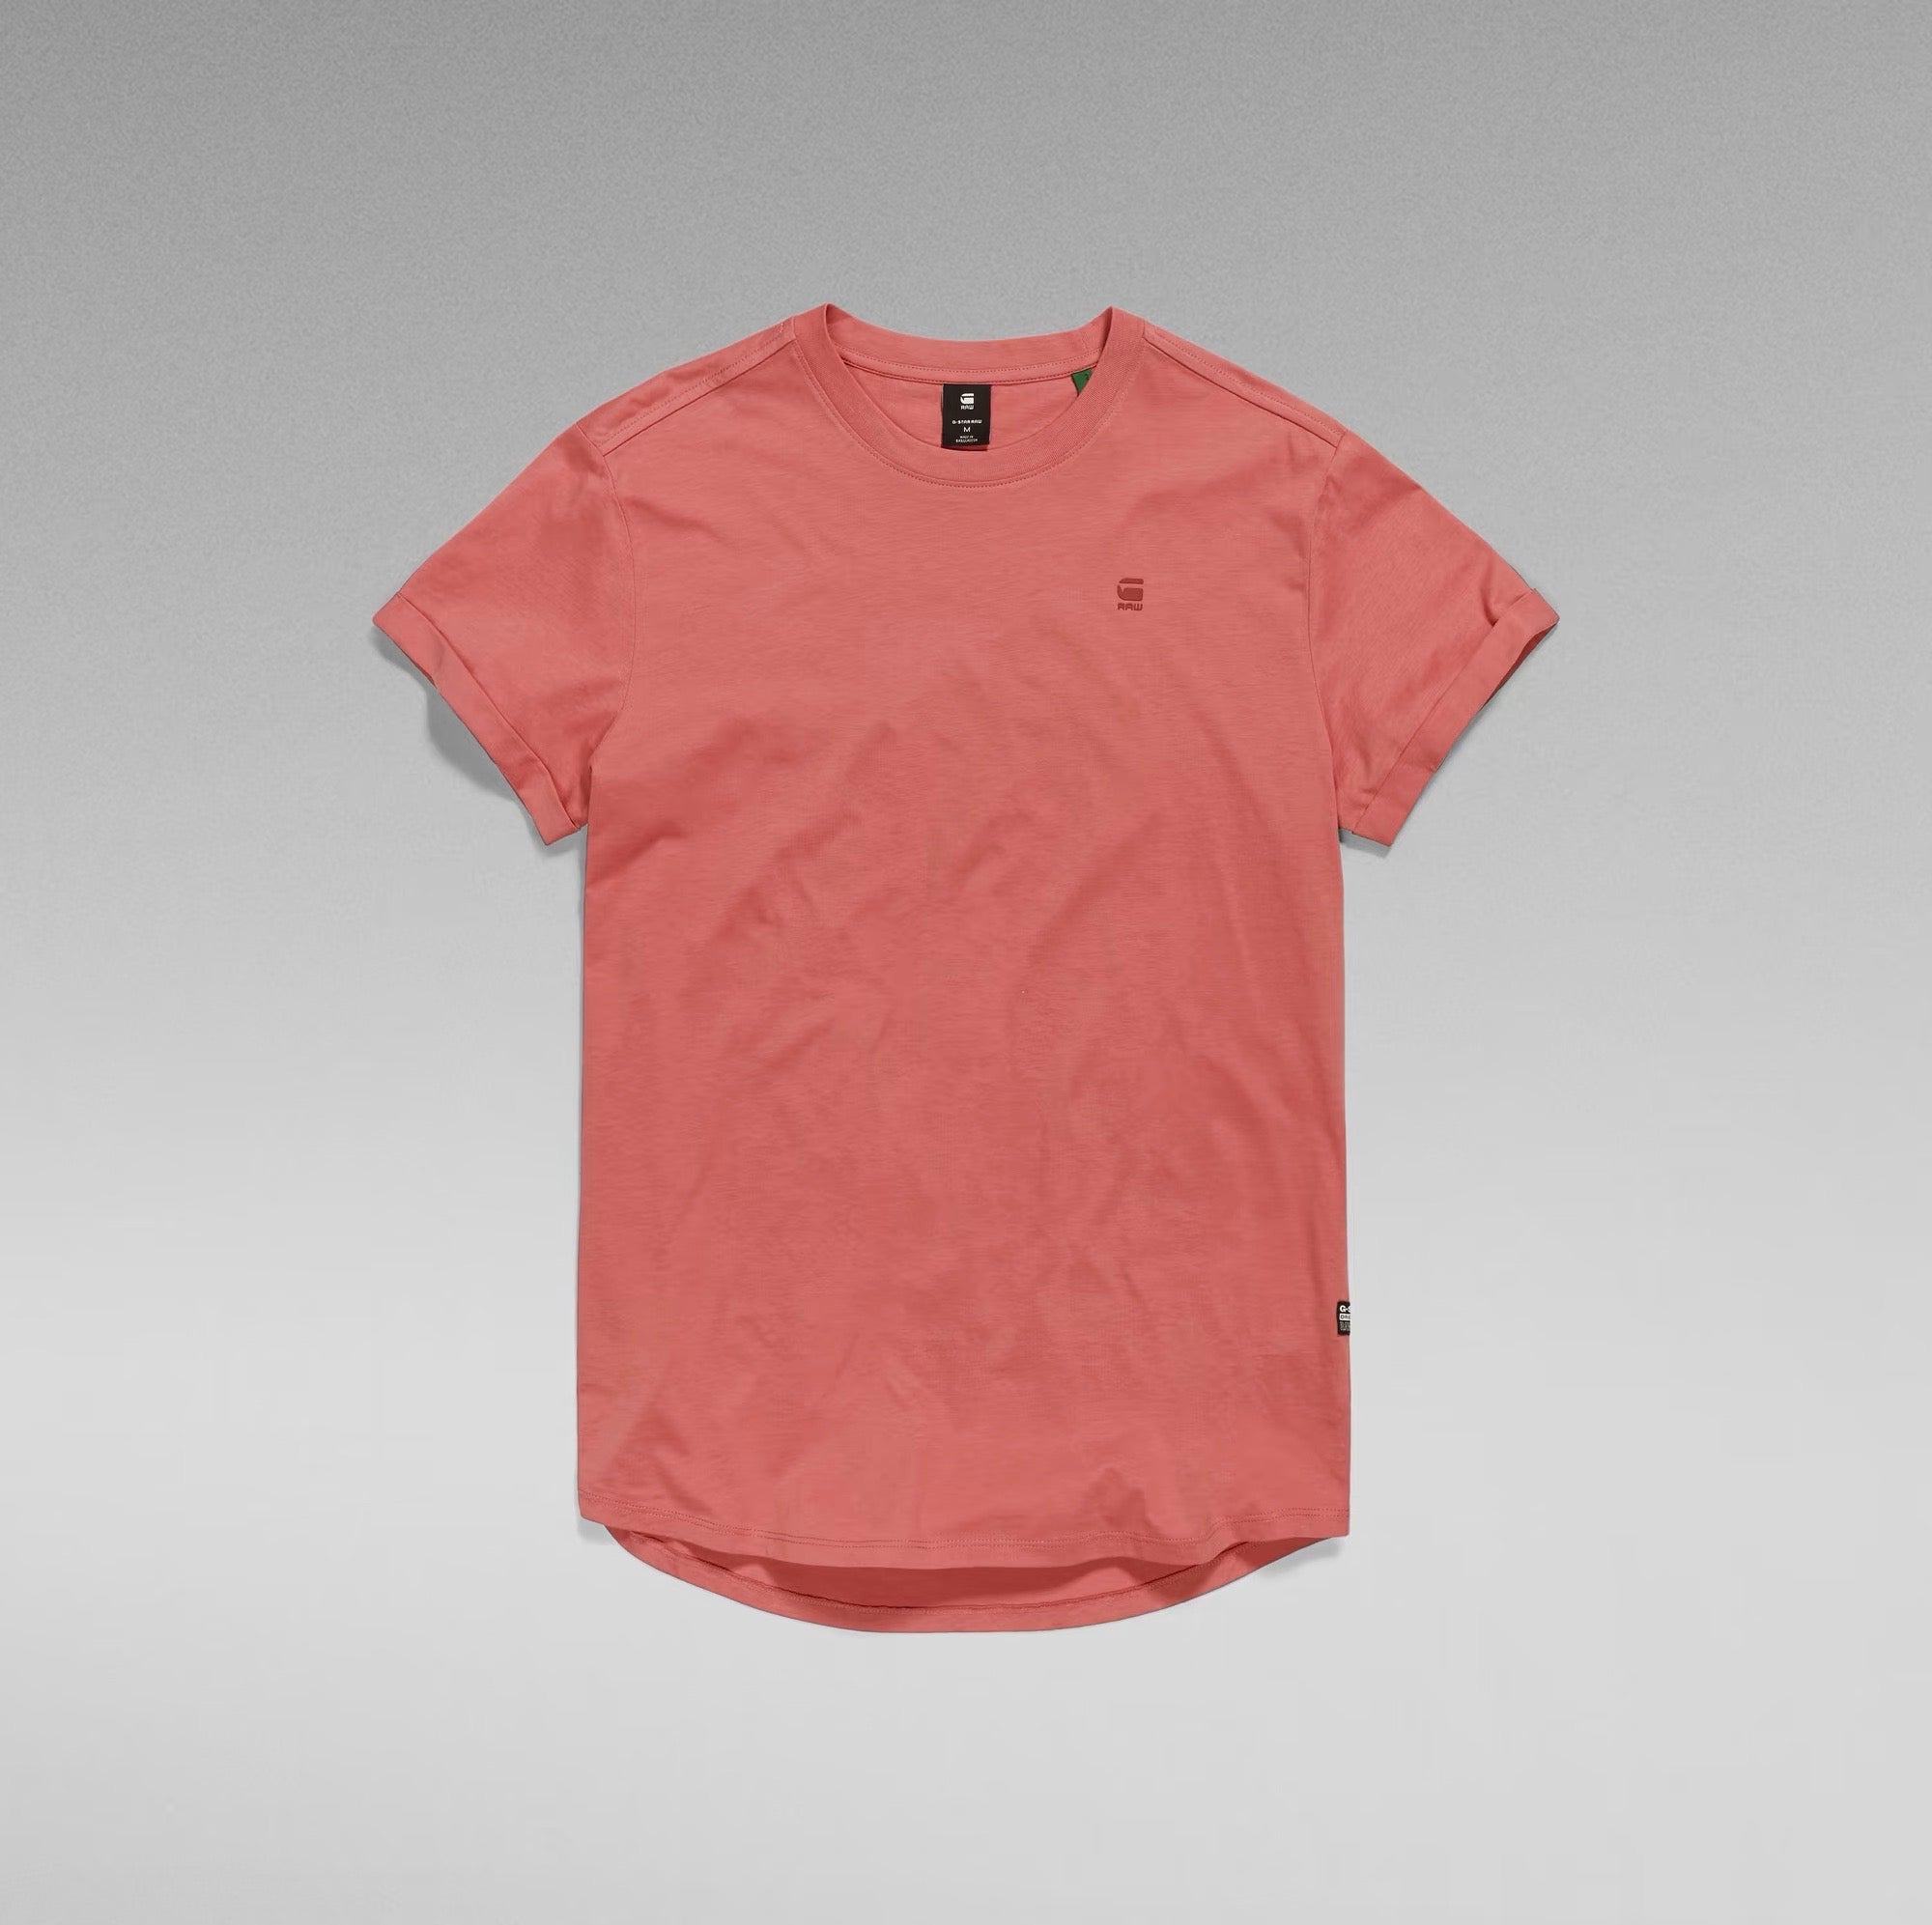 Lash T-Shirt Short Sleeve Pink Ink